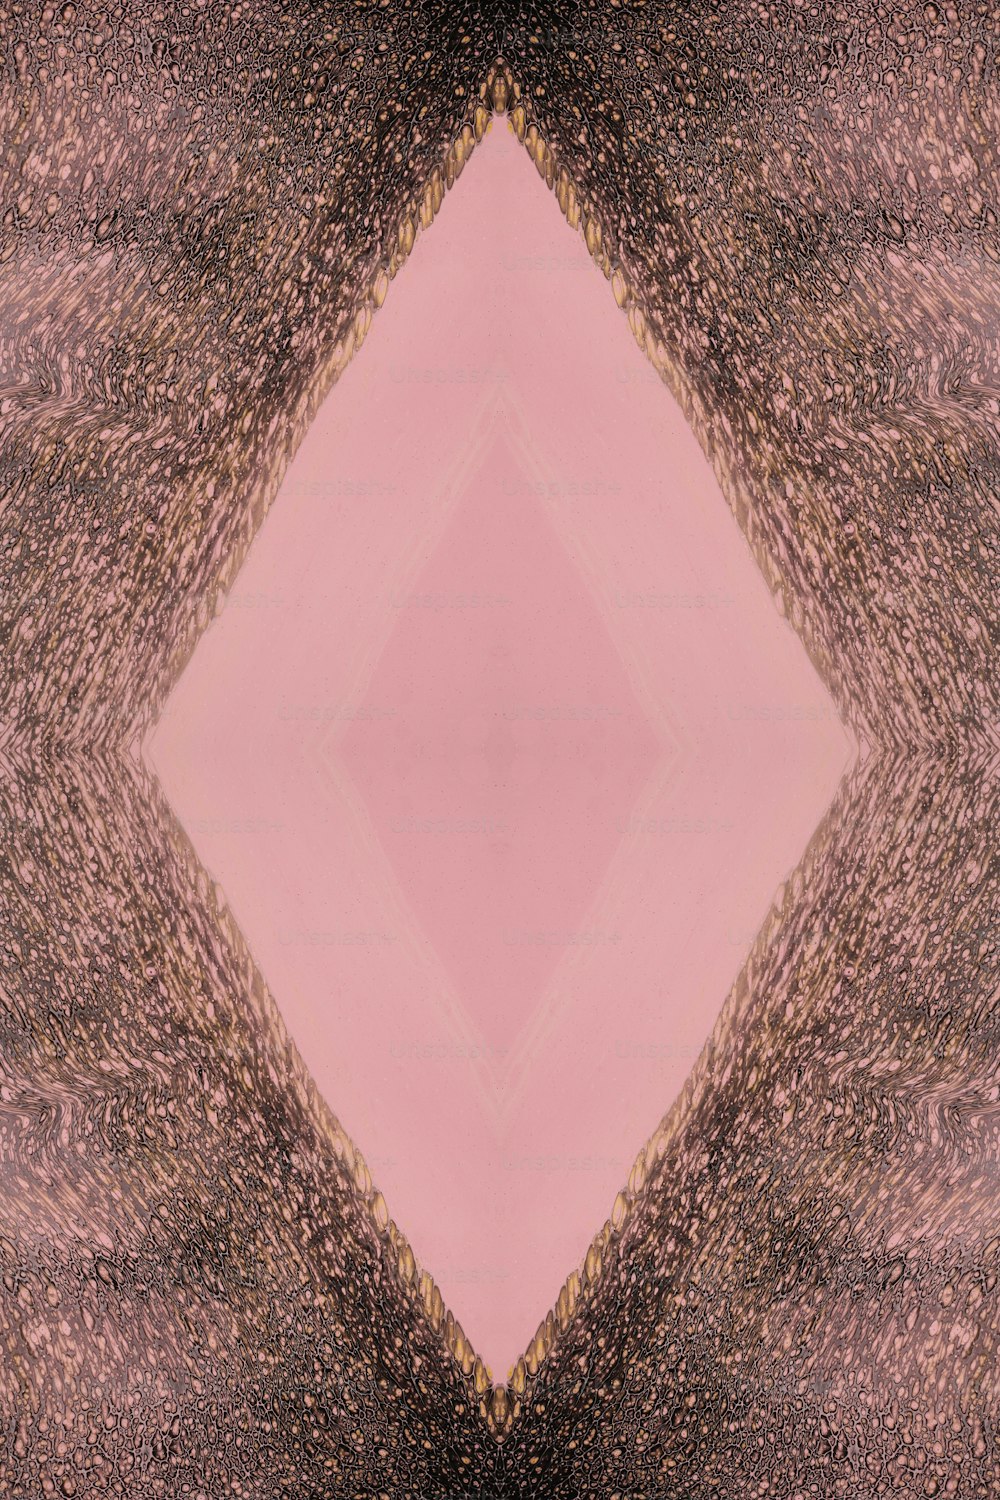 50,000+ Pink Fur Pictures  Download Free Images on Unsplash